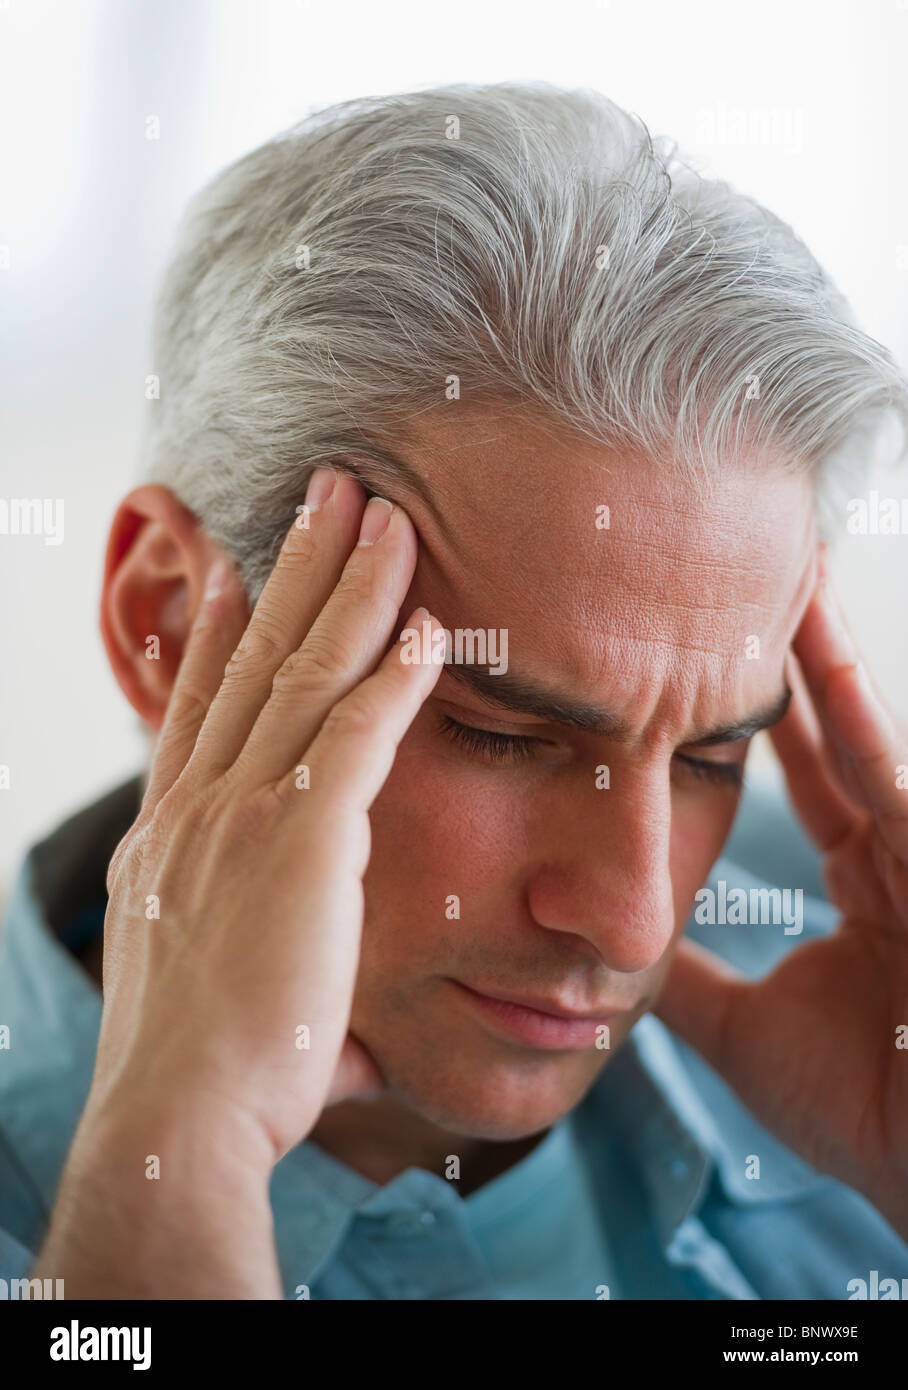 Man with a headache Stock Photo